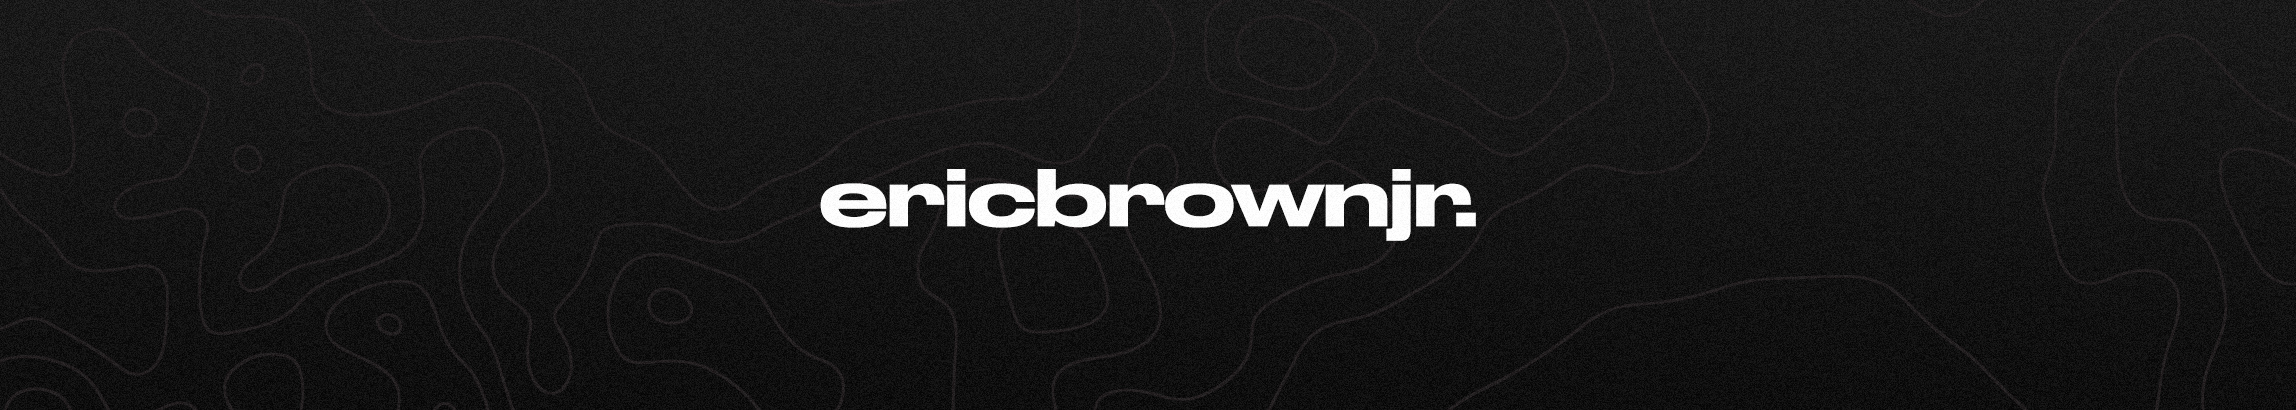 Eric Brown Jr.'s profile banner